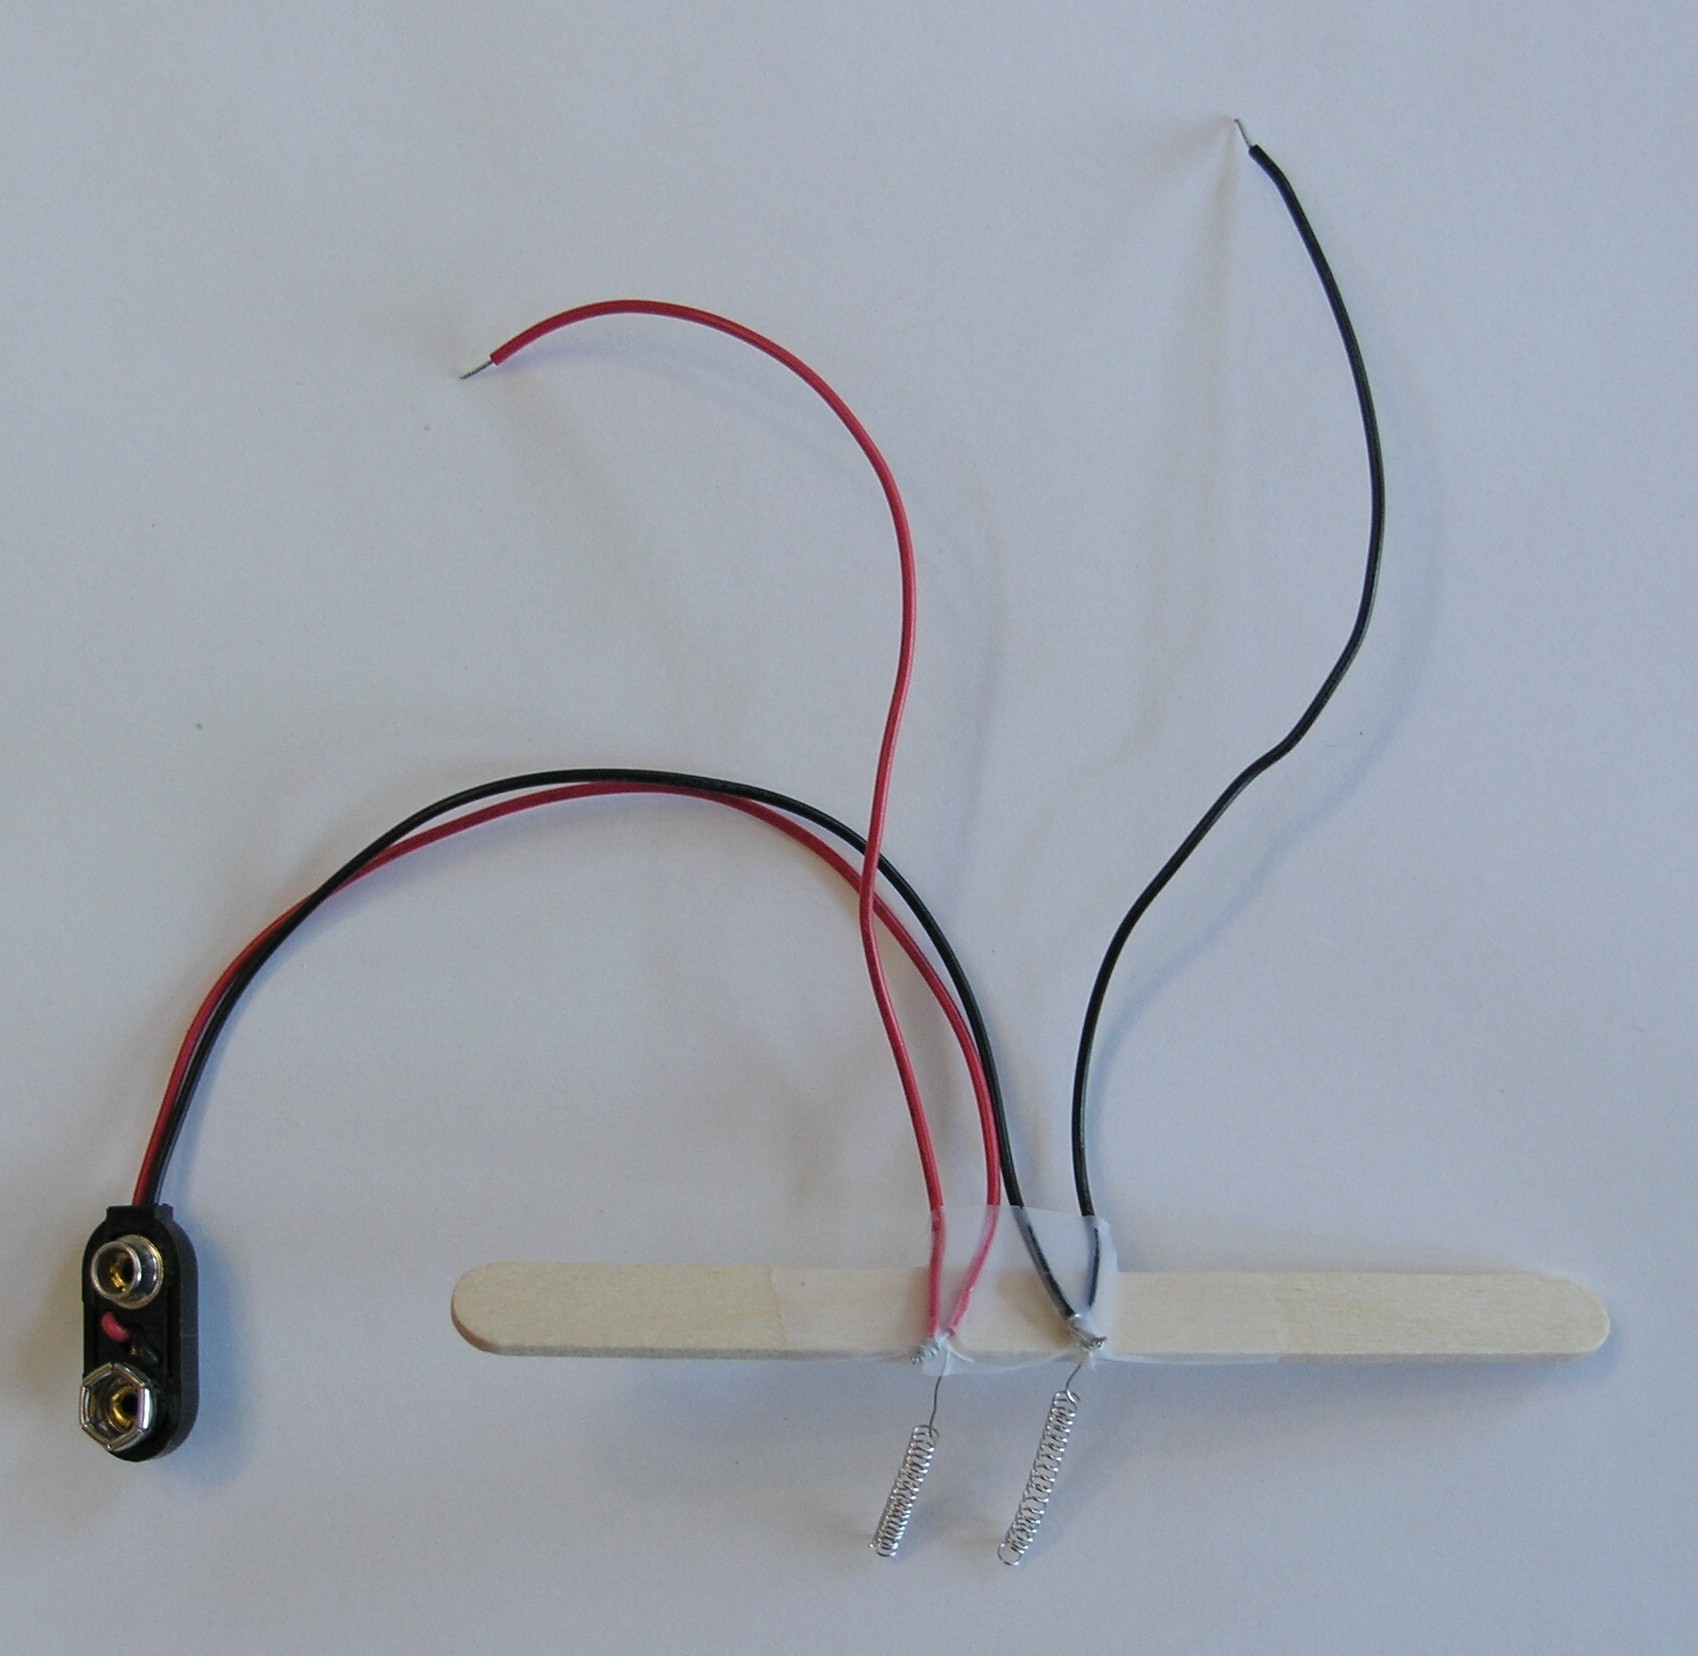 Electrode assembly